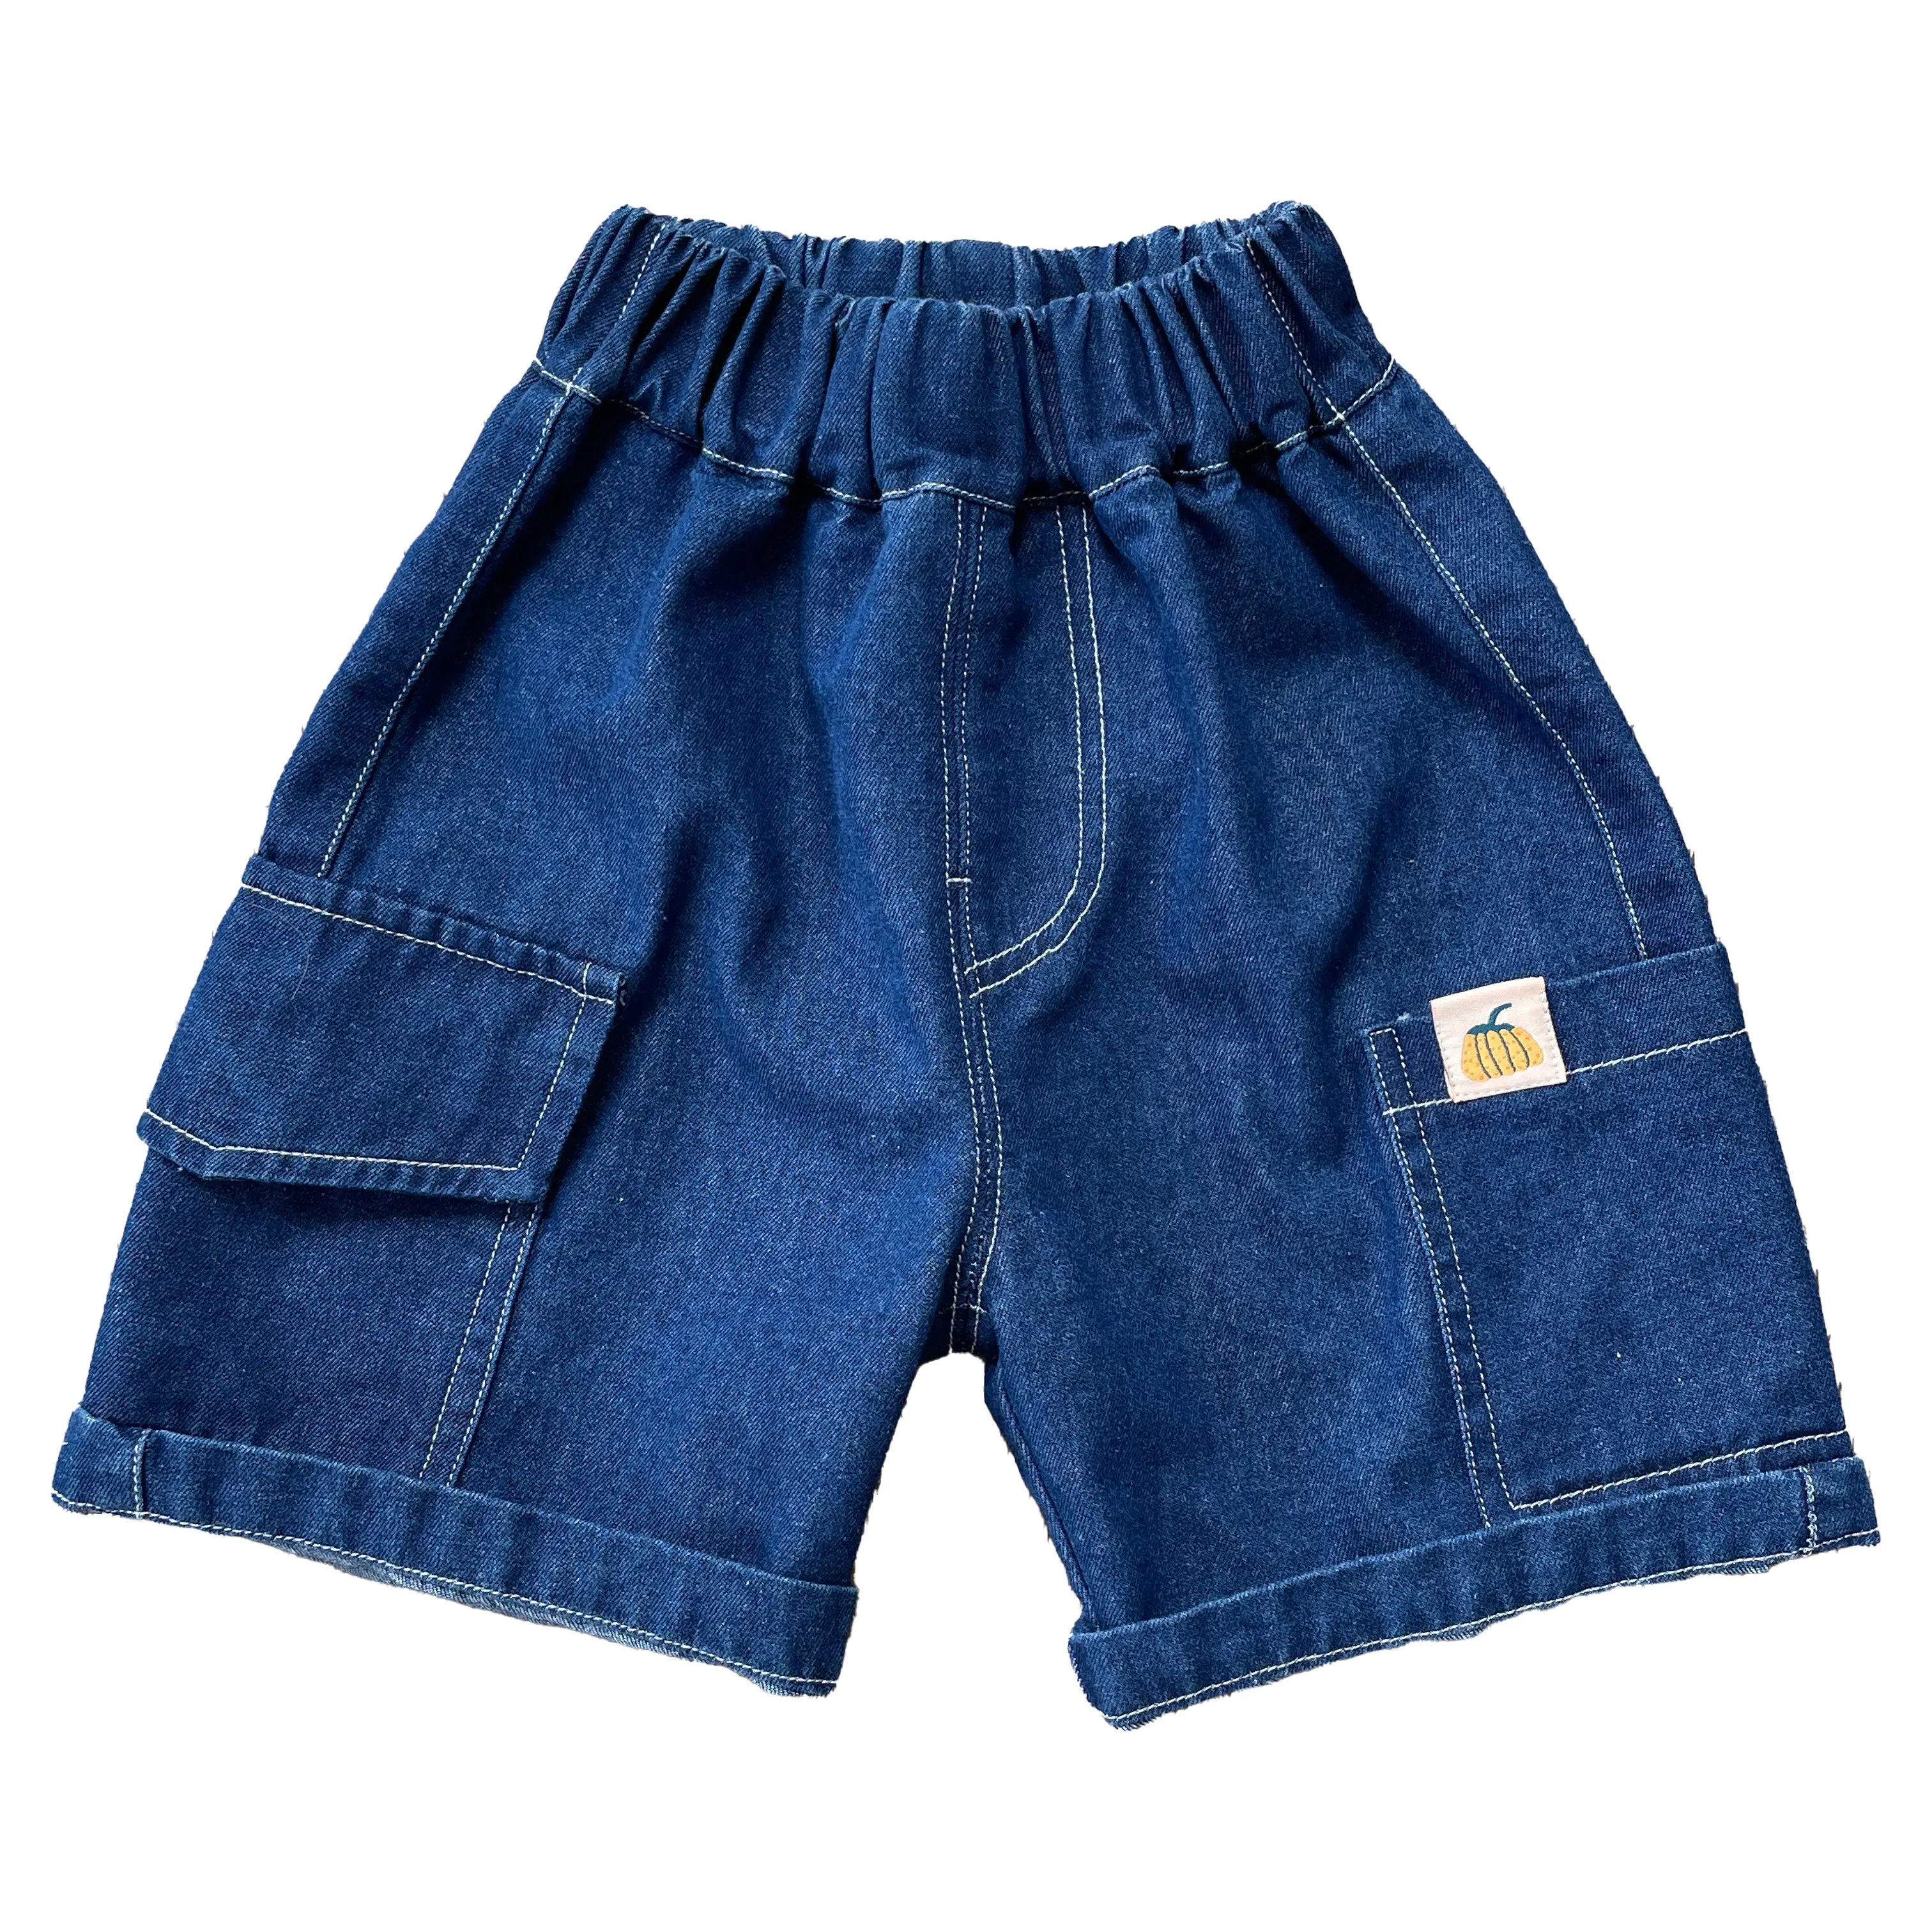 Wholesale Korean Kids Summer Short Pants Fashion Toddler Boy Jeans